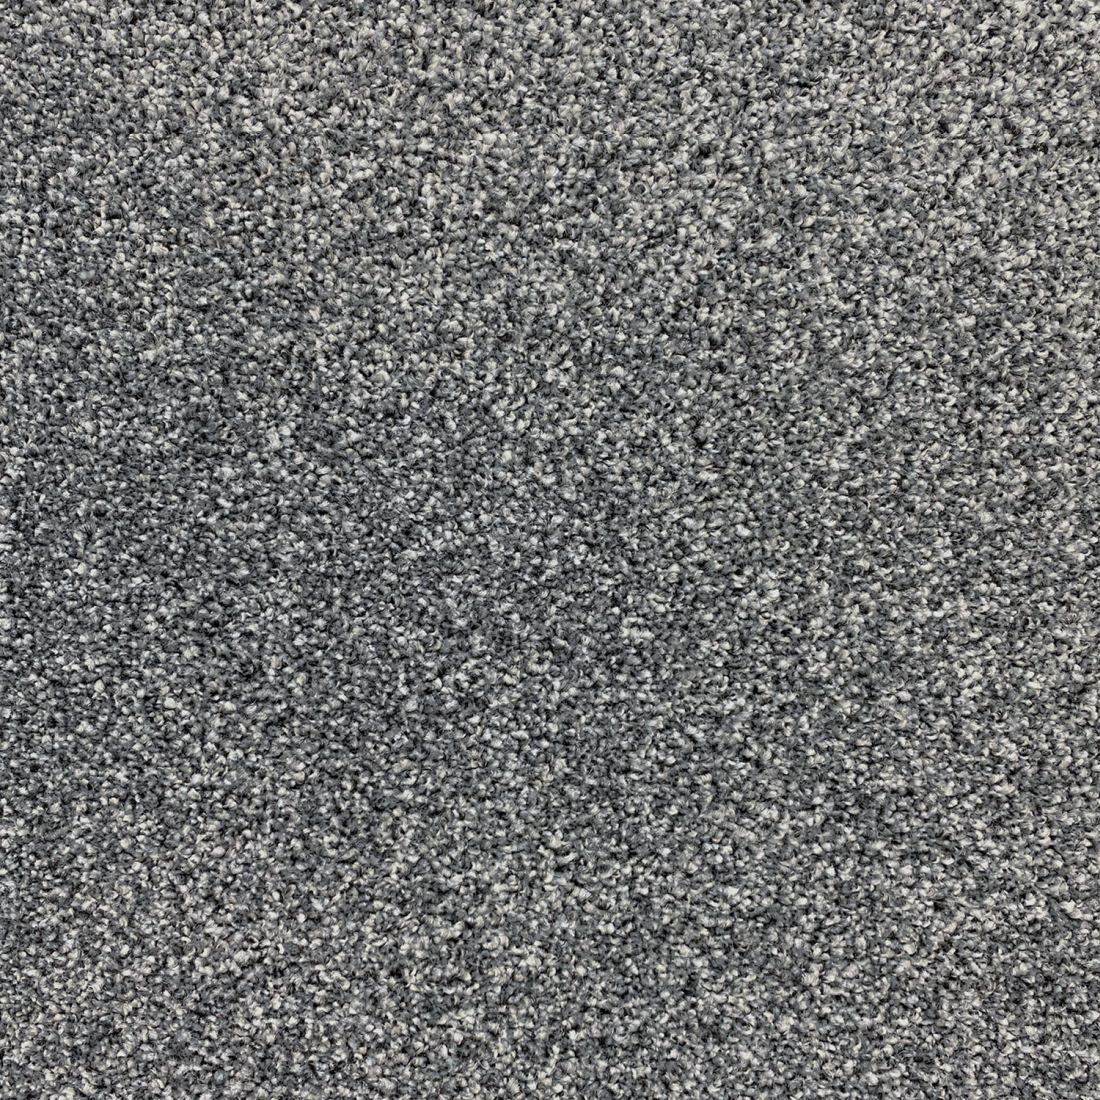 Invincible Rustic Stain Resistant Twist Carpet - Prestige